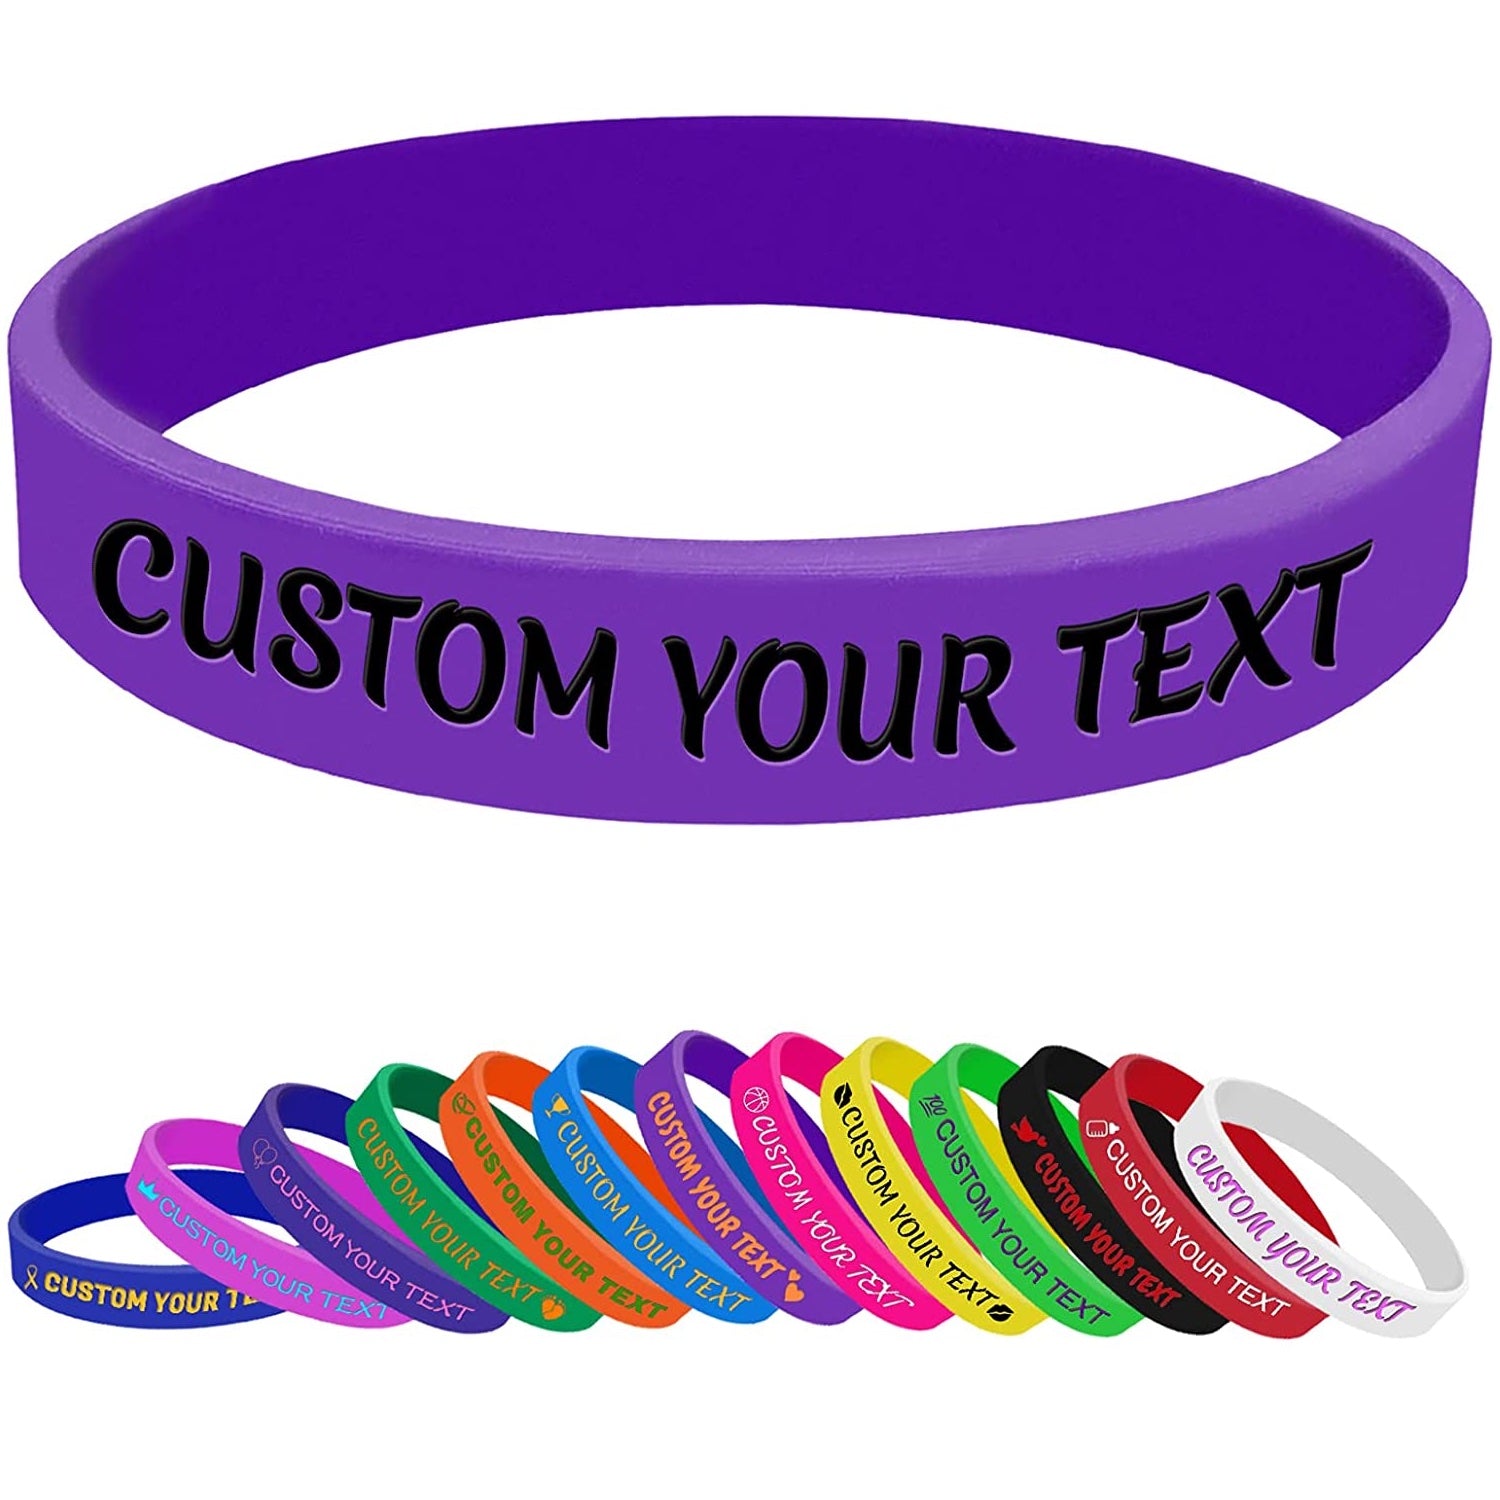 Buy WristcoPremium Neon Orange Plastic Secure Snap Wristbands - 500 Count  5/8